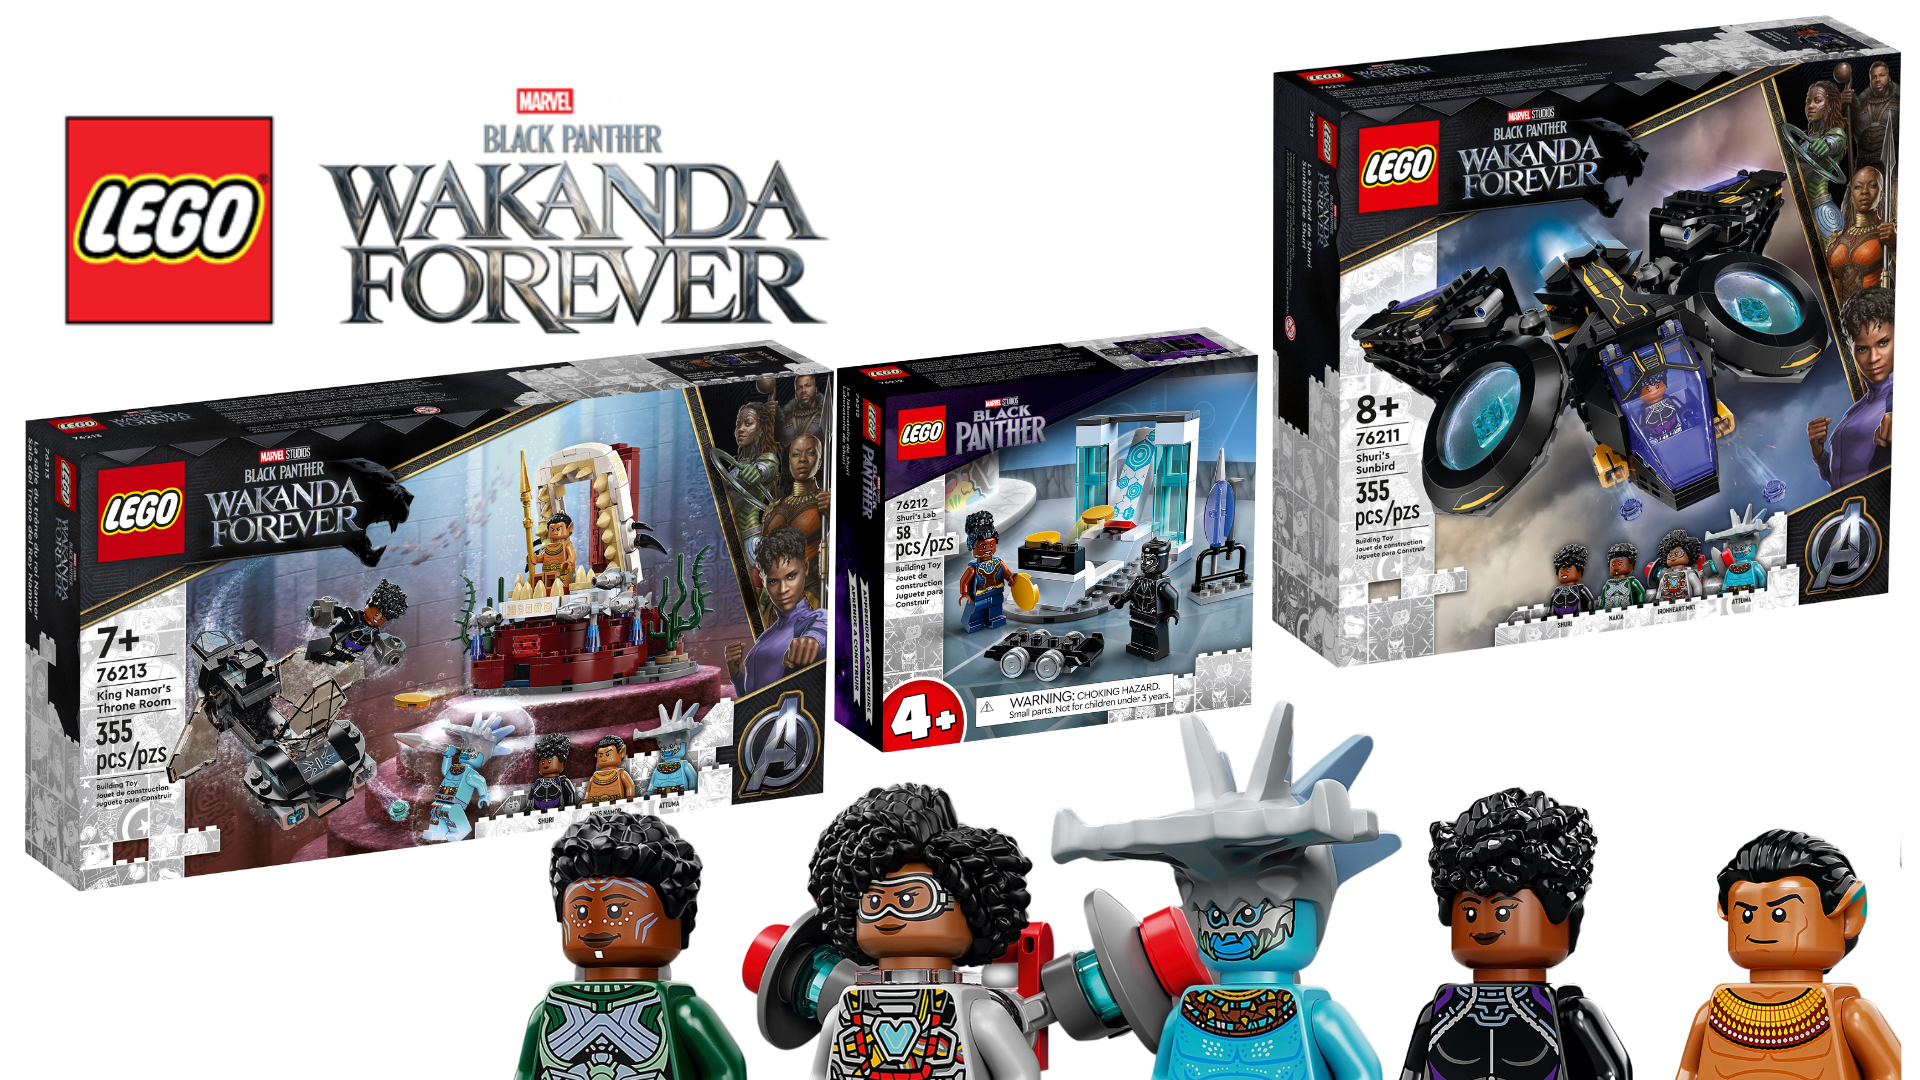 https://jaysbrickblog.com/wp-content/uploads/2022/08/LEGO-Black-Panther-Wakanda-Forever-Feature.png